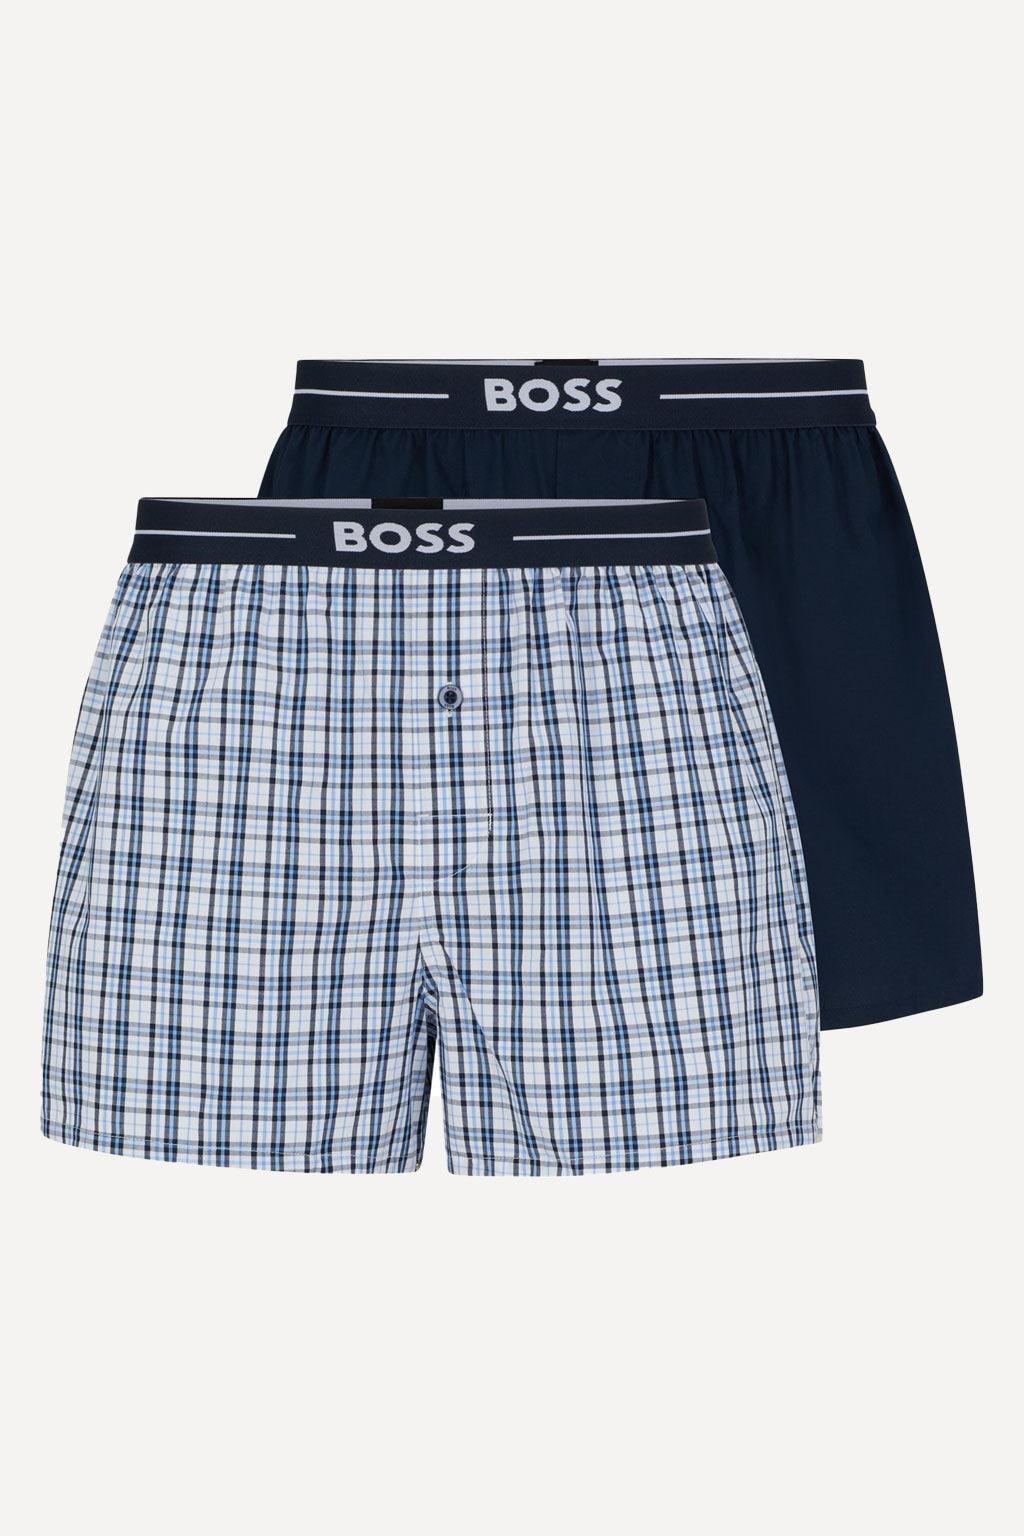 Hugo Boss underwear - Big Boss | the menswear concept